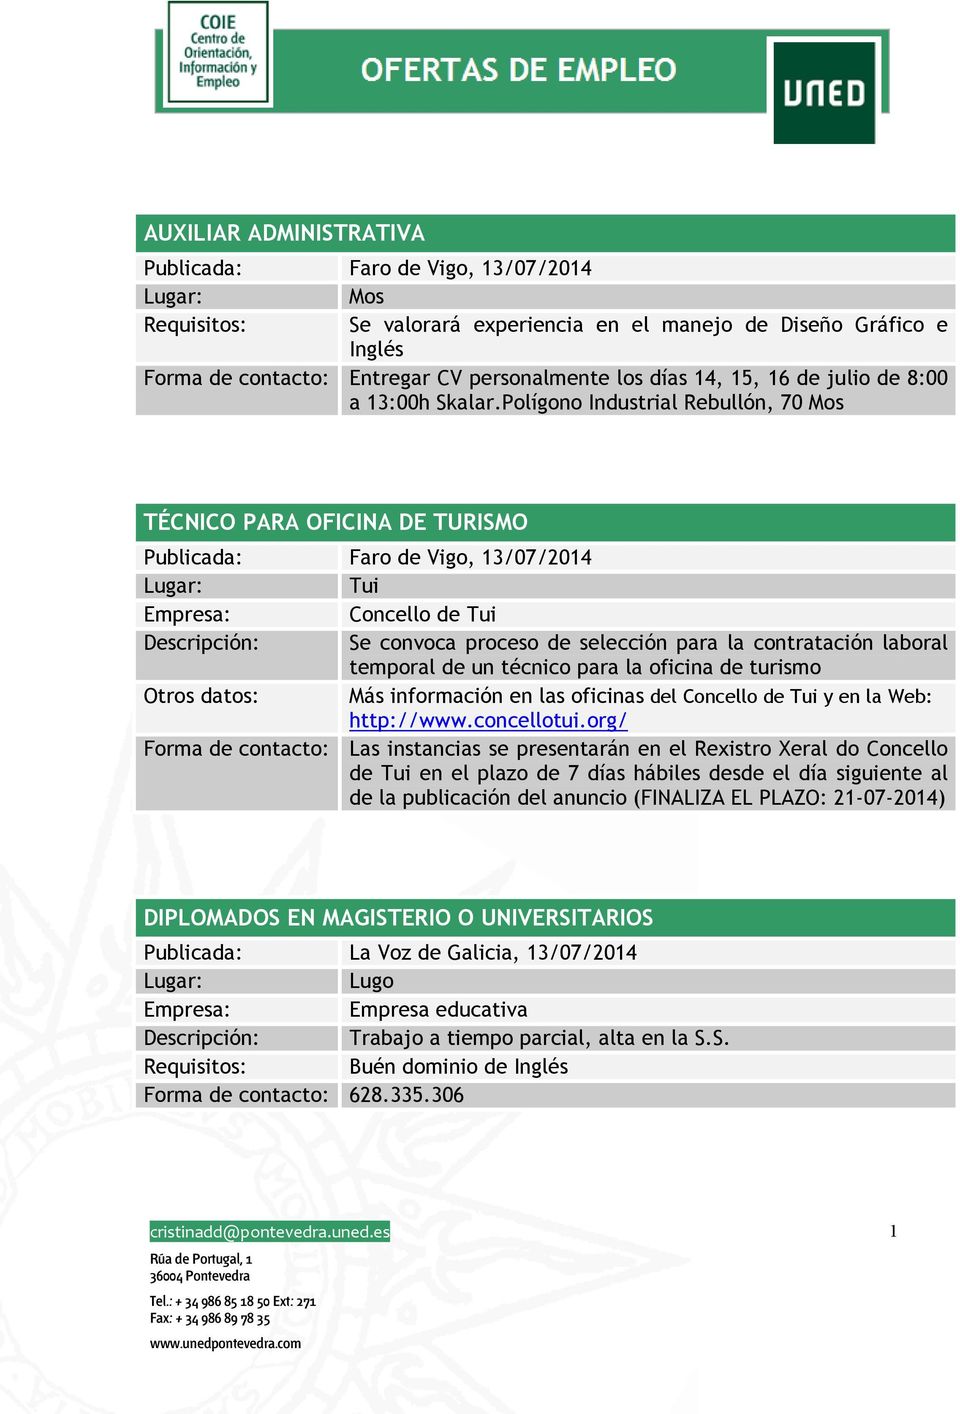 Polígono Industrial Rebullón, 70 Mos TÉCNICO PARA OFICINA DE TURISMO Publicada: Faro de Vigo, 13/07/2014 Tui Empresa: Concello de Tui Descripción: Se convoca proceso de selección para la contratación